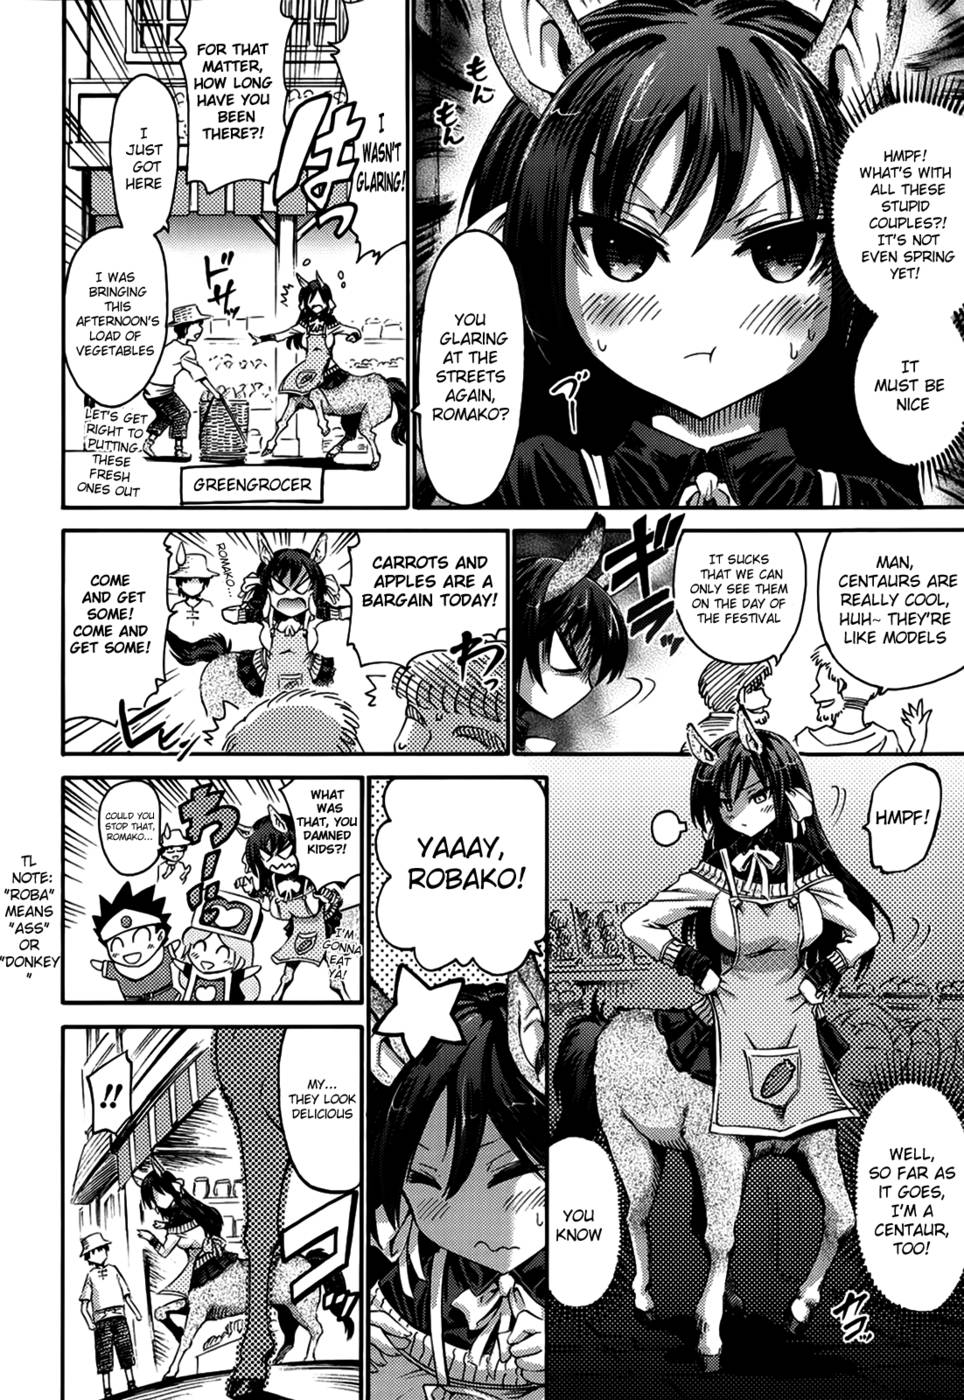 Hentai Manga Comic-Well, I'm a Centaur, too, you know!-Read-2